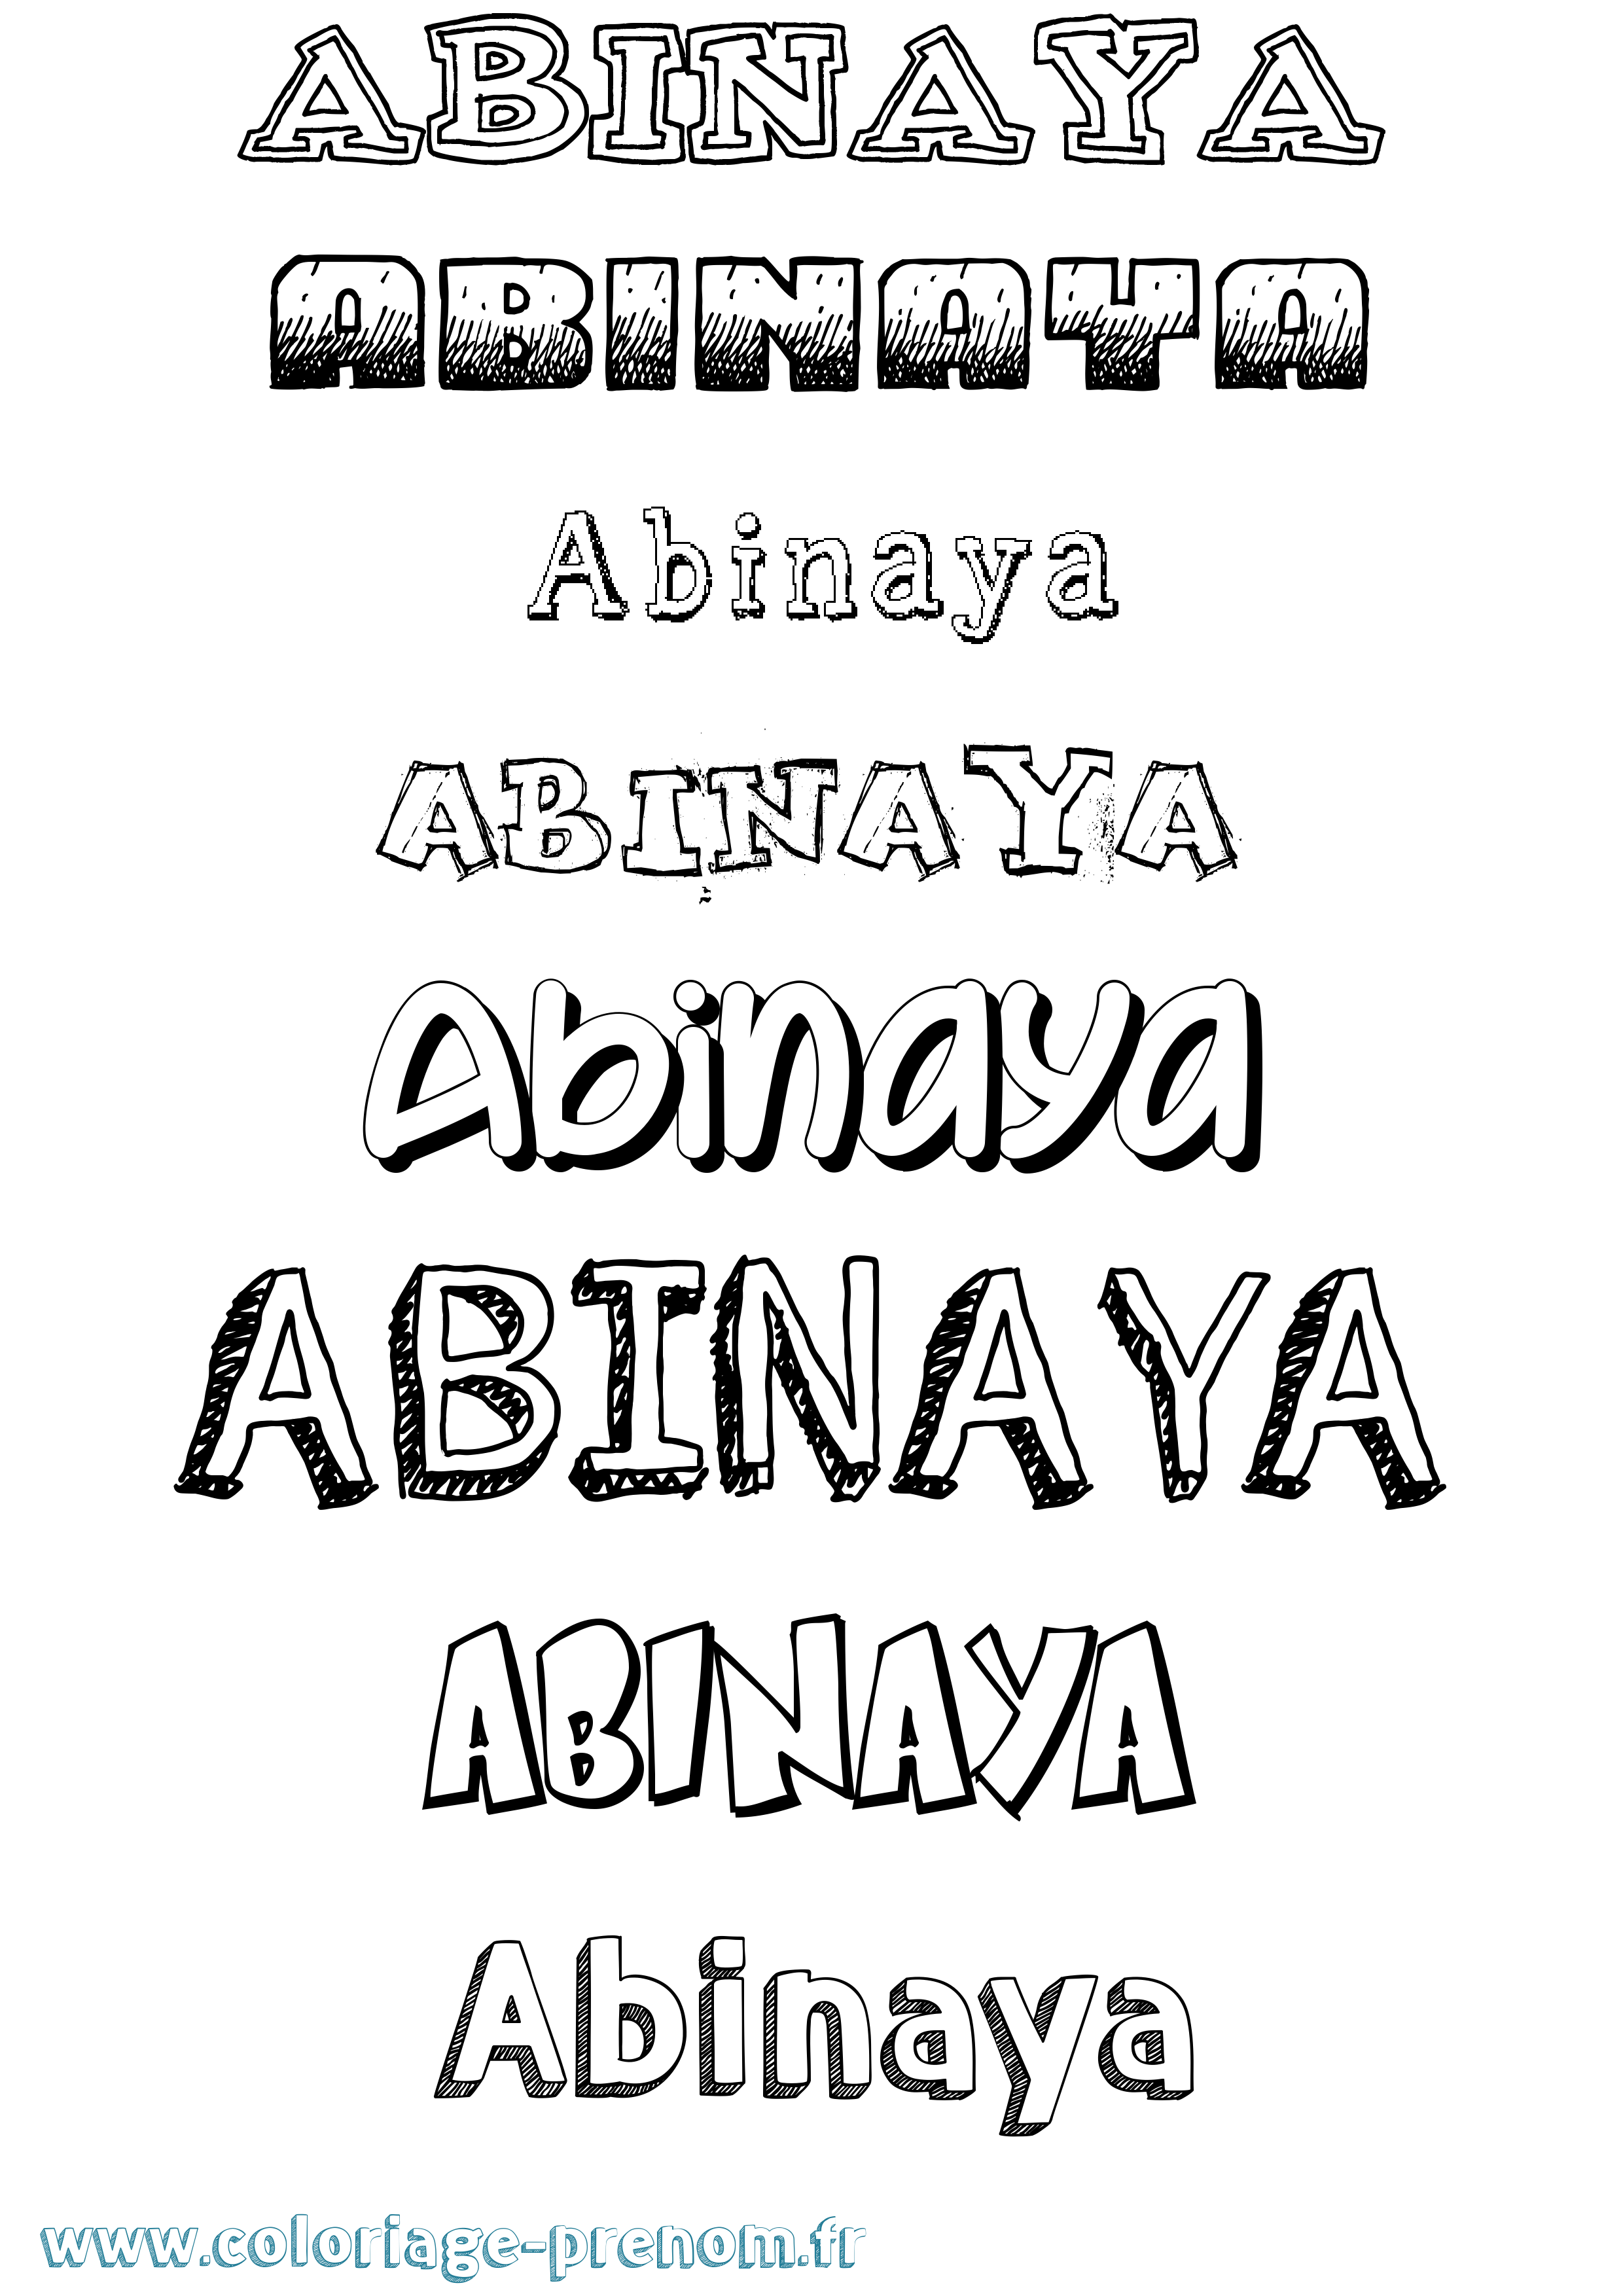 Coloriage prénom Abinaya Dessiné